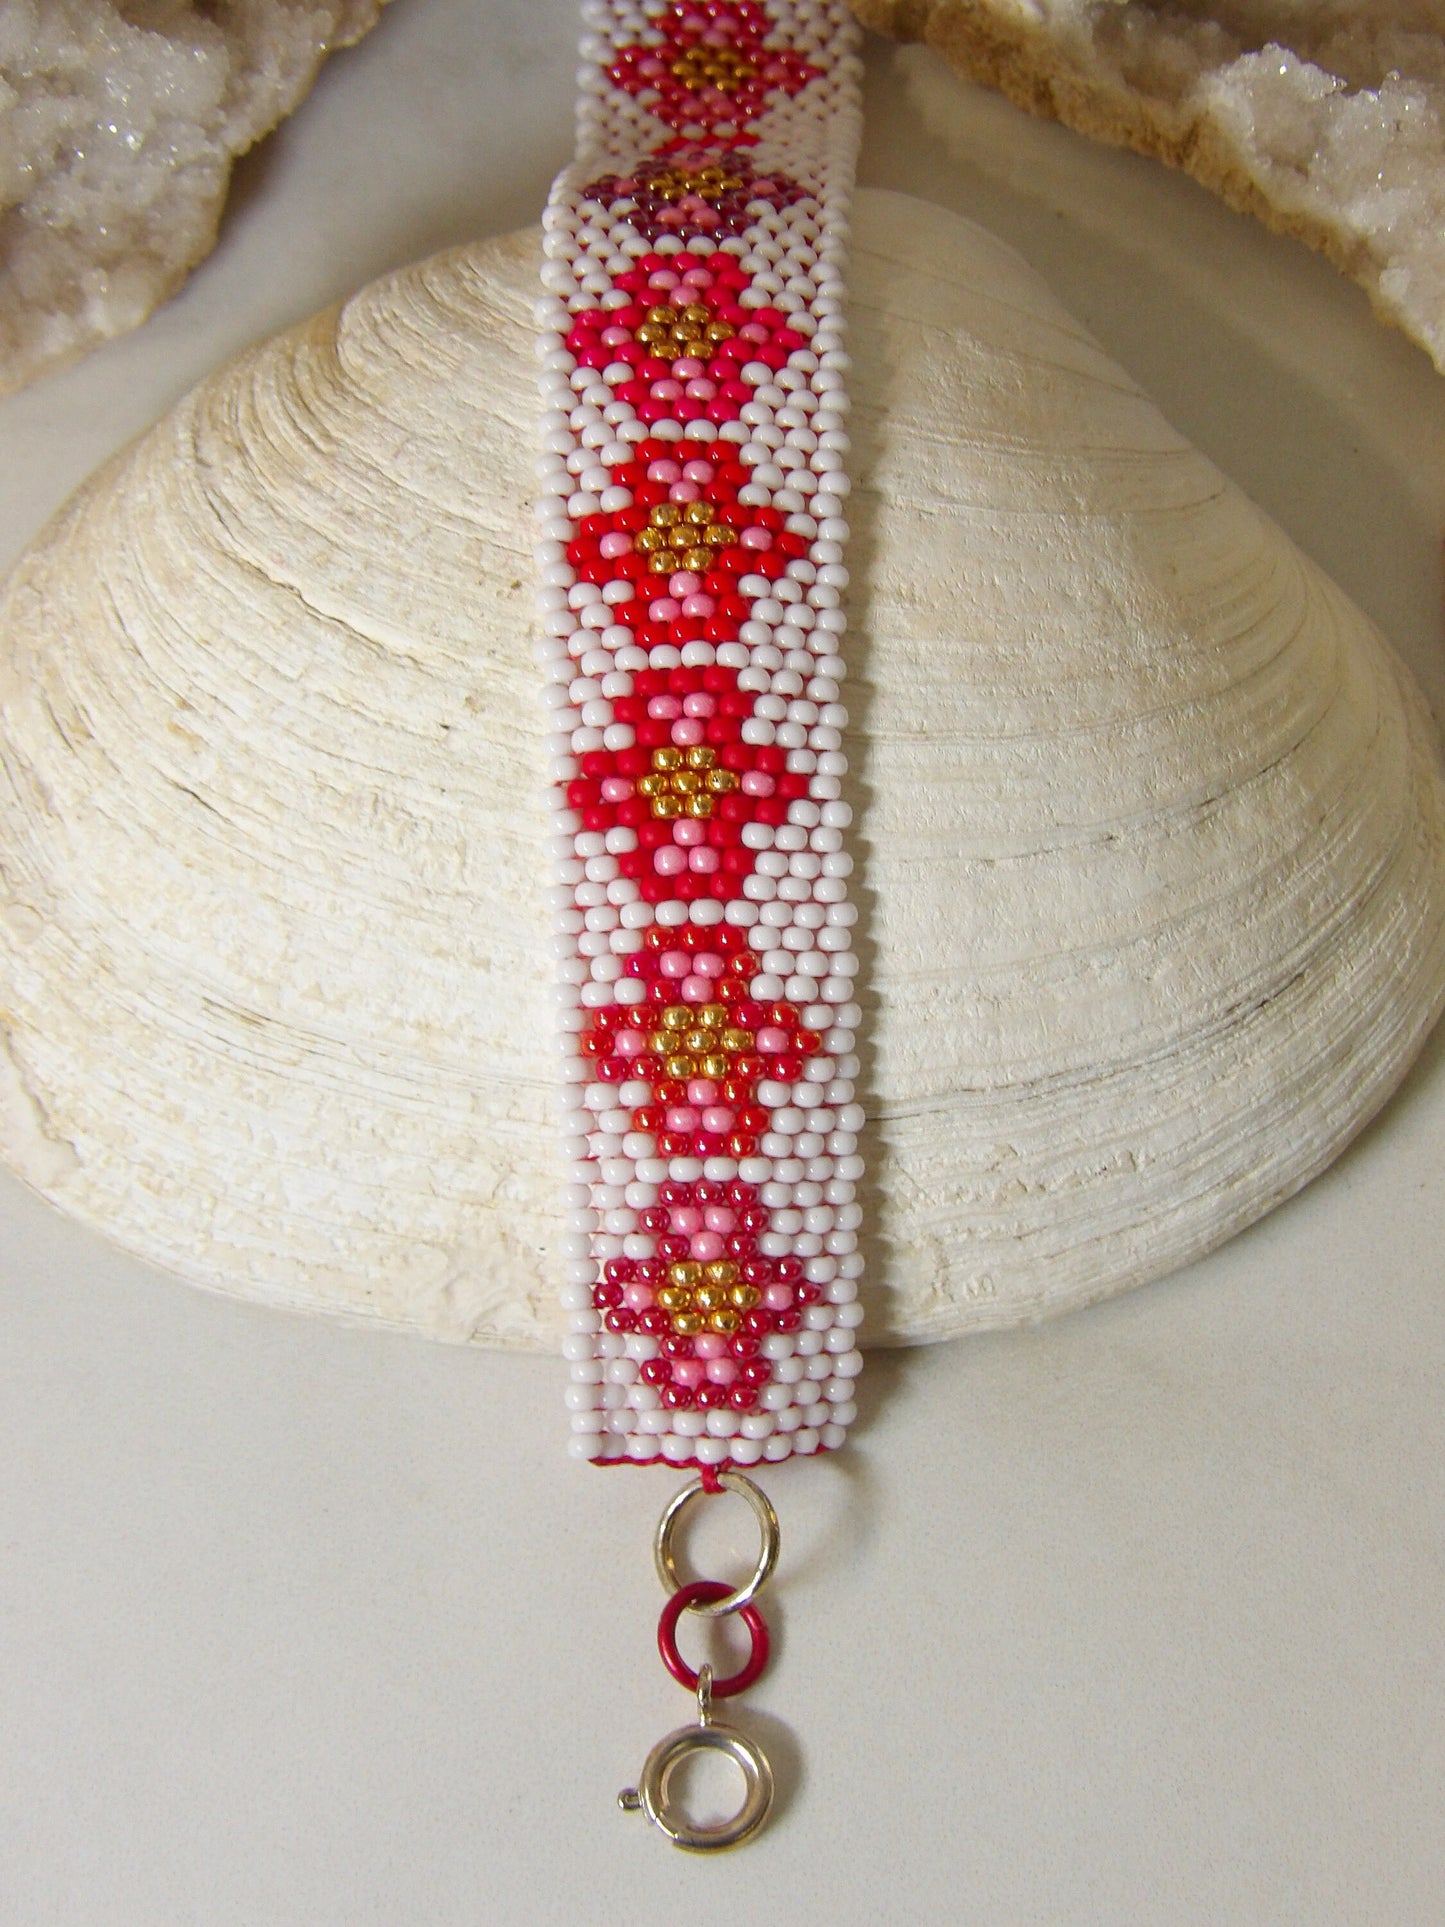 Boho Seed Bead Cuff Bracelet - Cross Flowers | Handmade Bohemian Jewelry | Hippie Jewelry | Handwoven Beadwork Made In USA